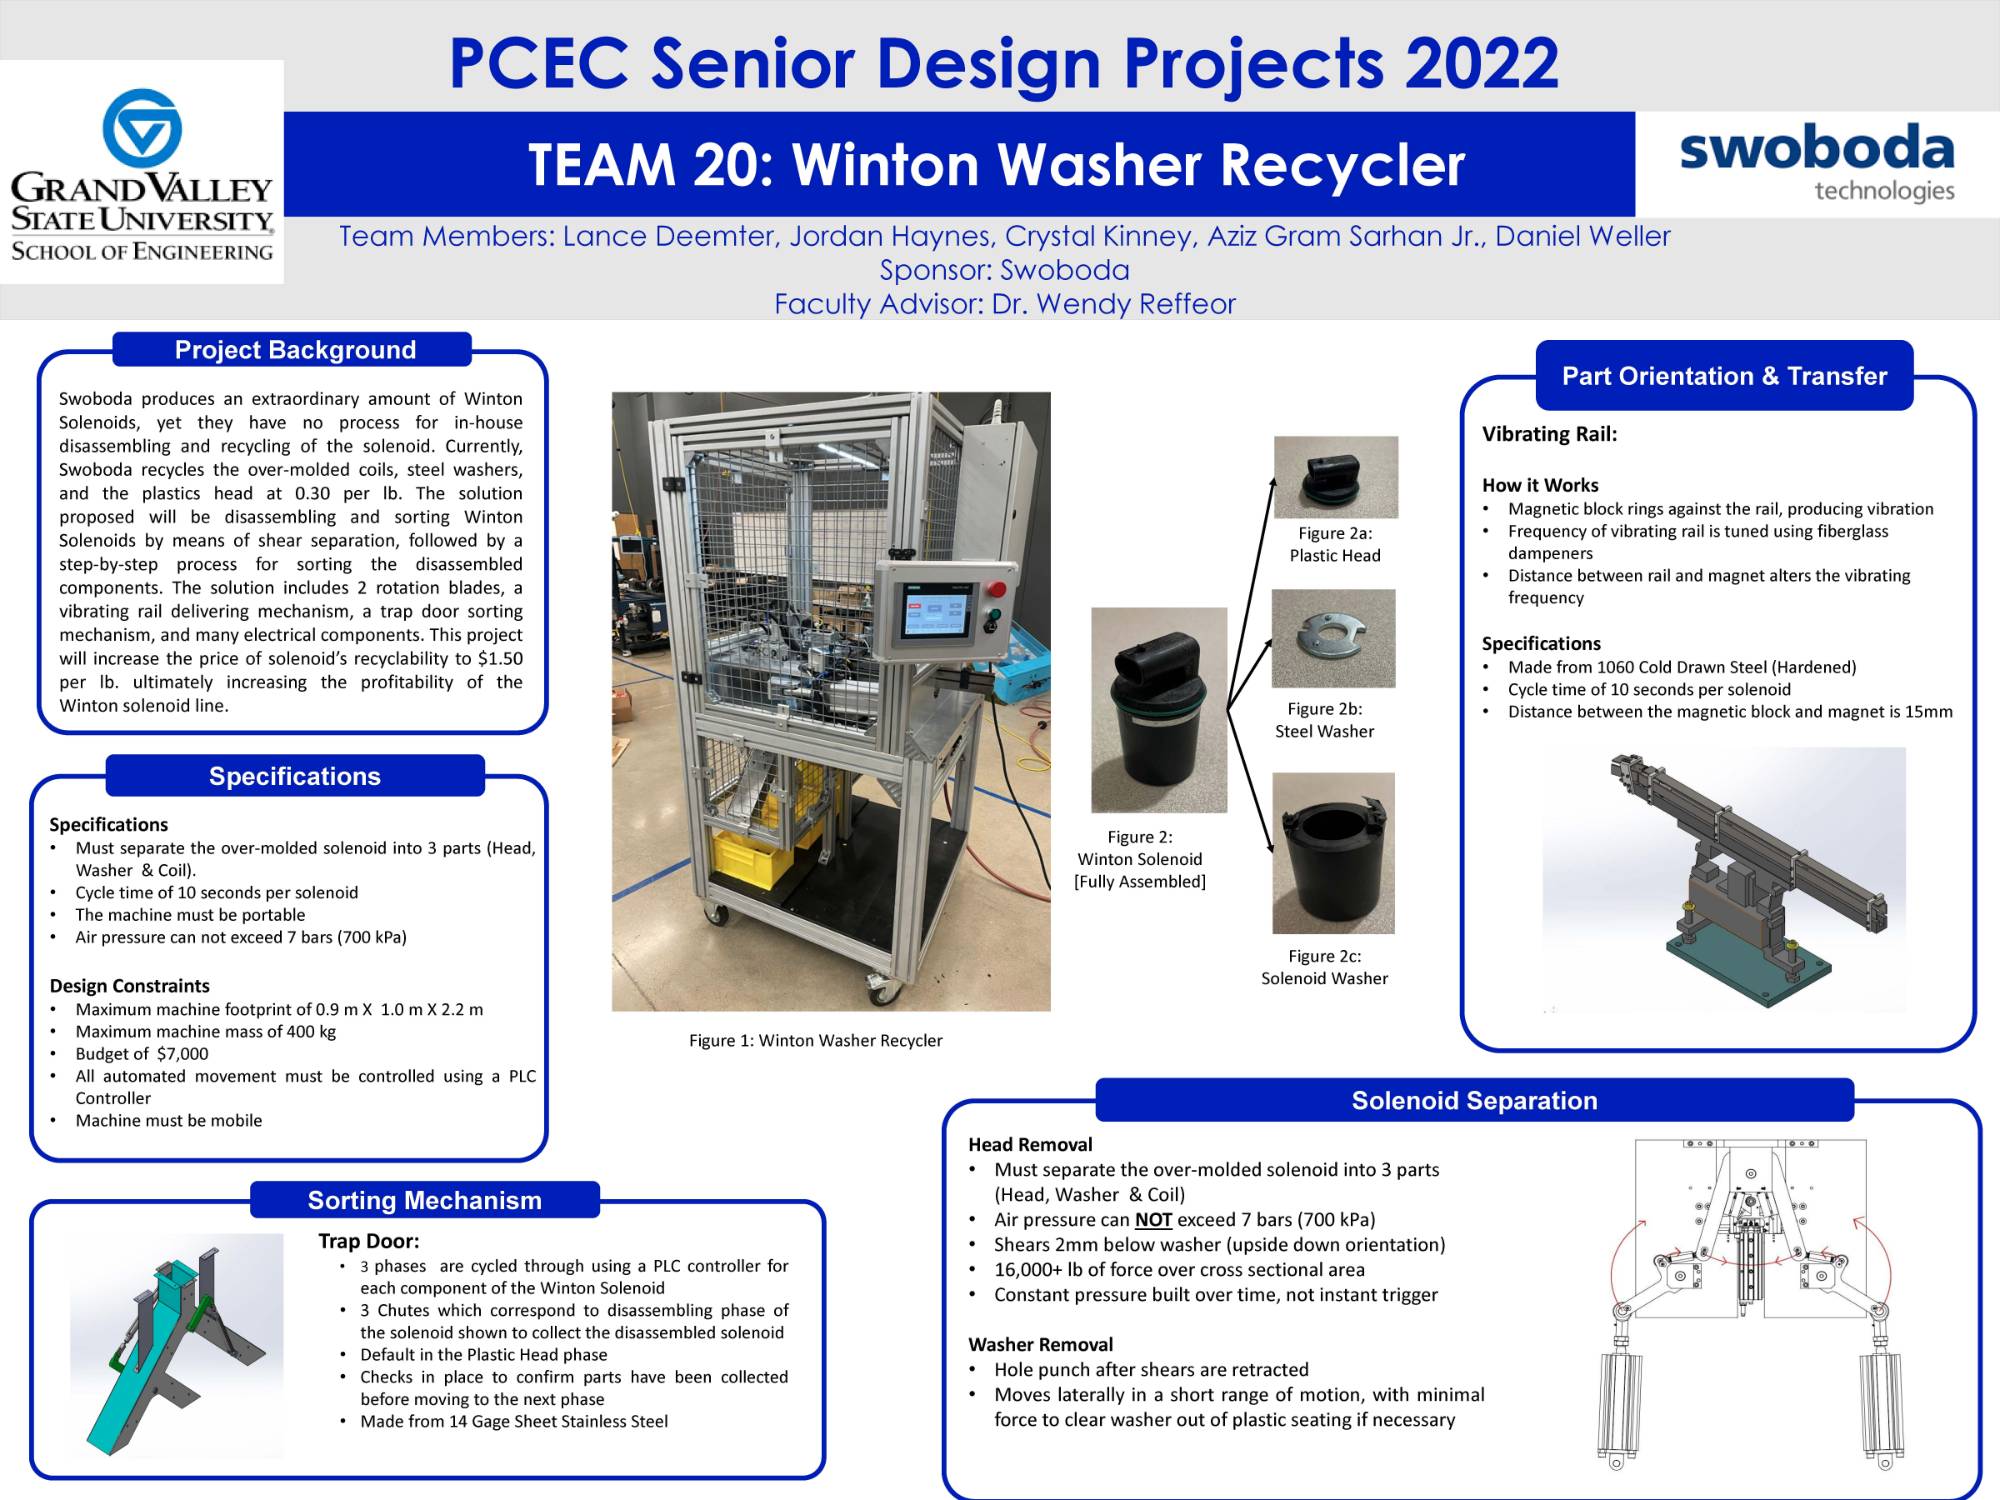 Project Presentation for Swoboda Technologies Senior Design Project